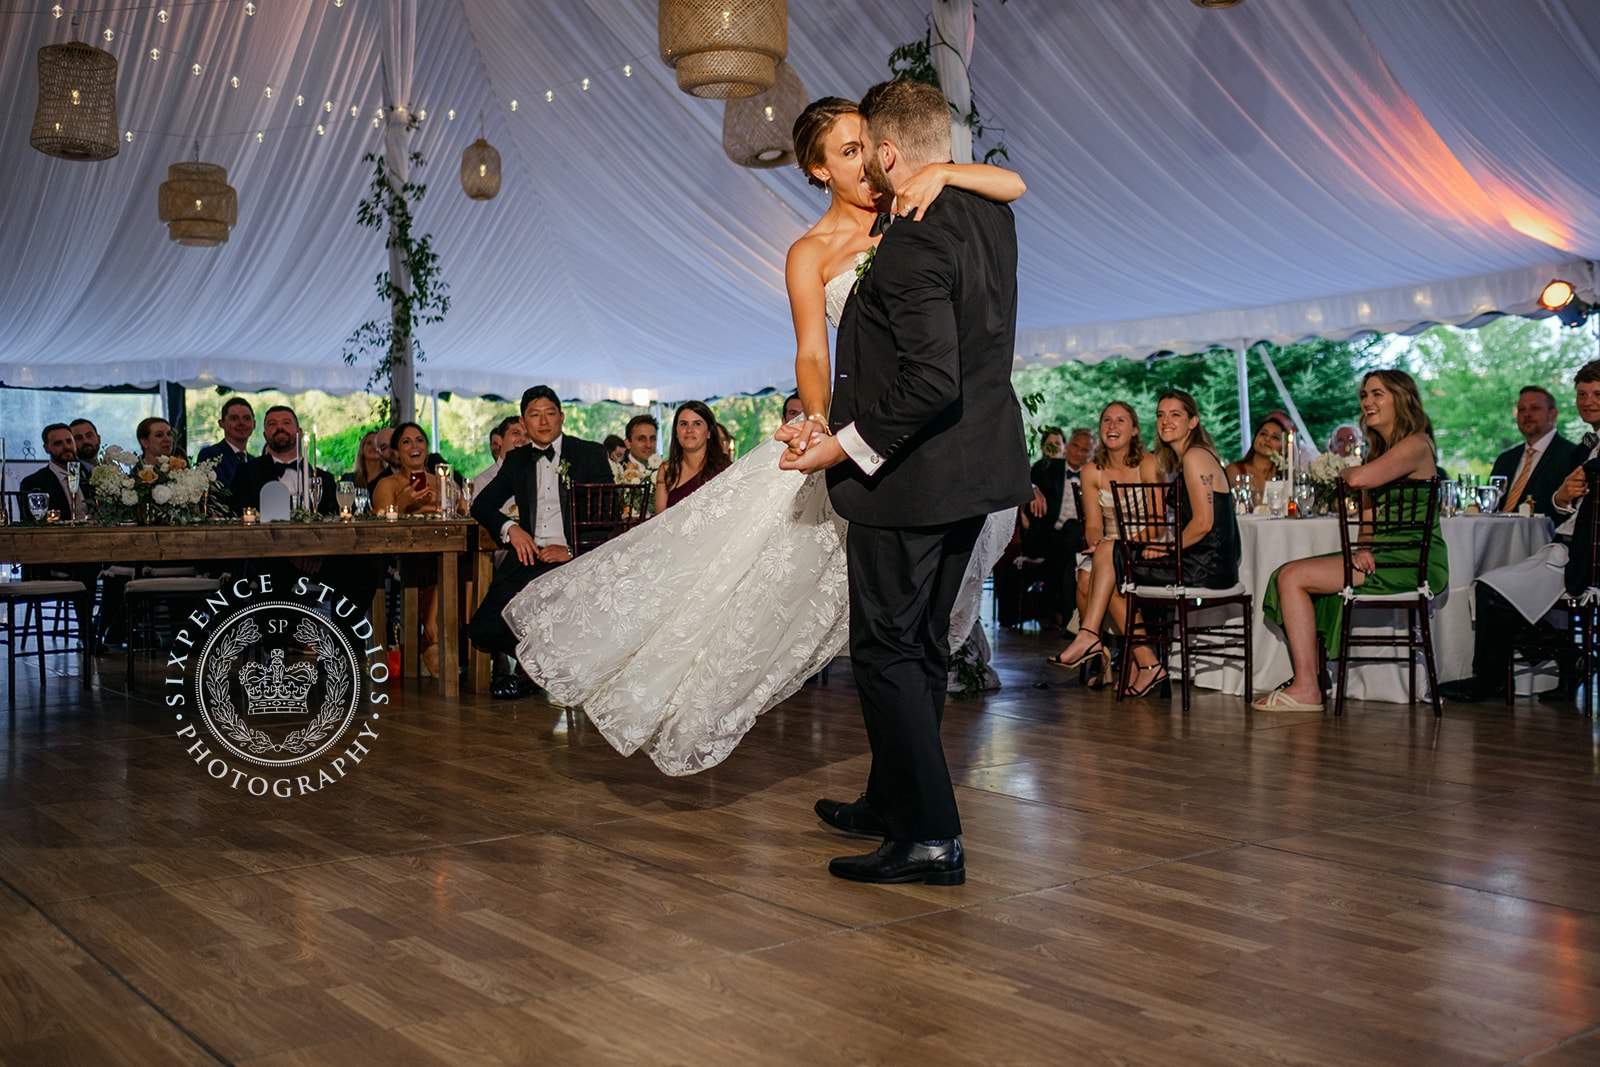 Adventurous Hearts Unite: Breathtaking Vermont Wedding Extravaganza | Elizabeth Anne Designs